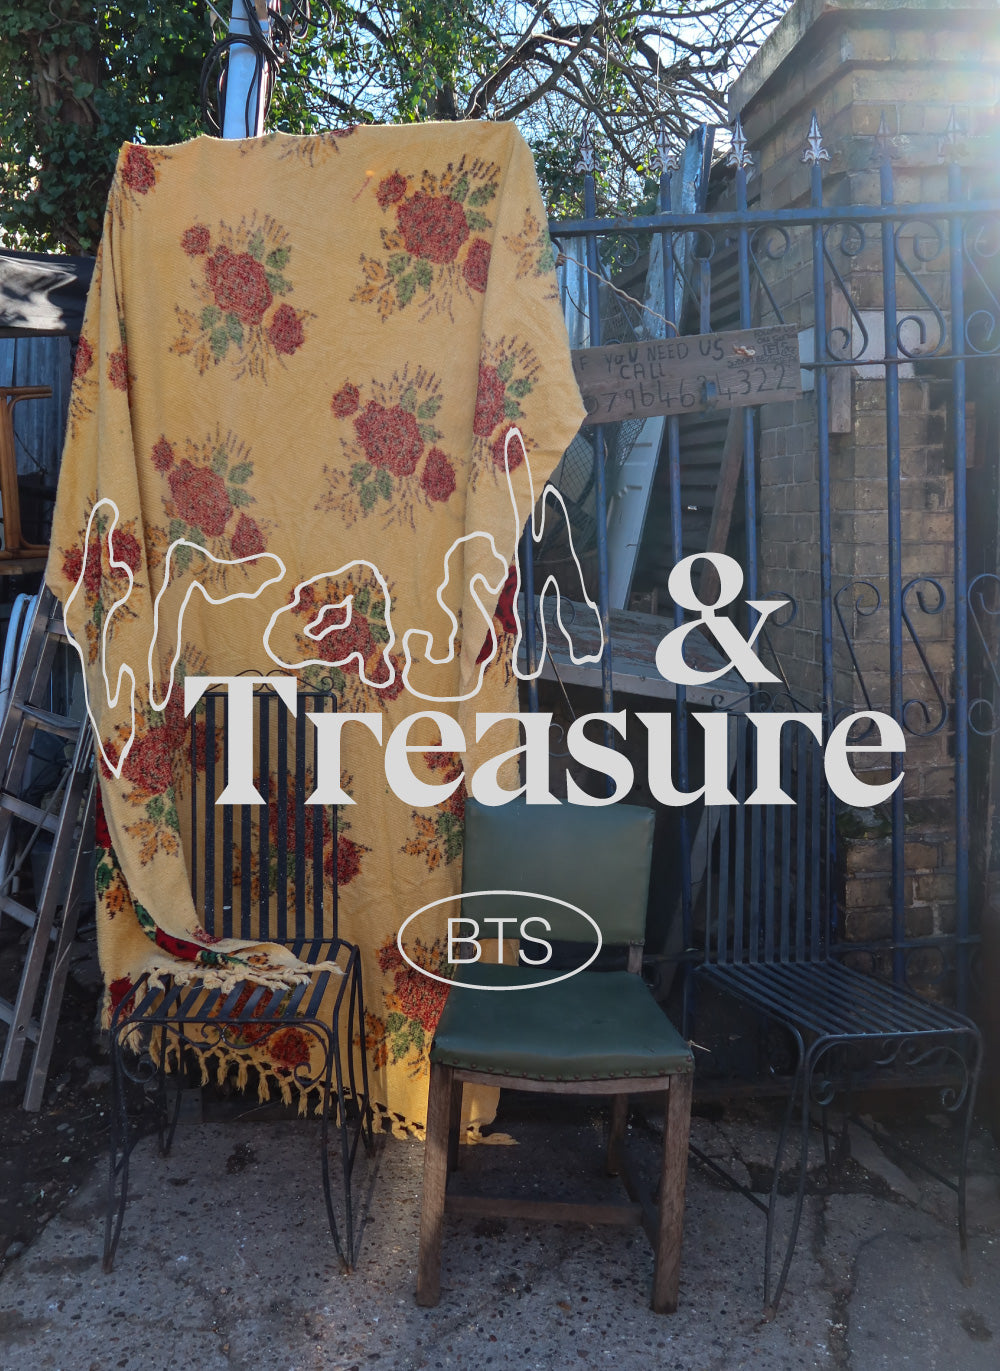 Trash & Treasure BTS